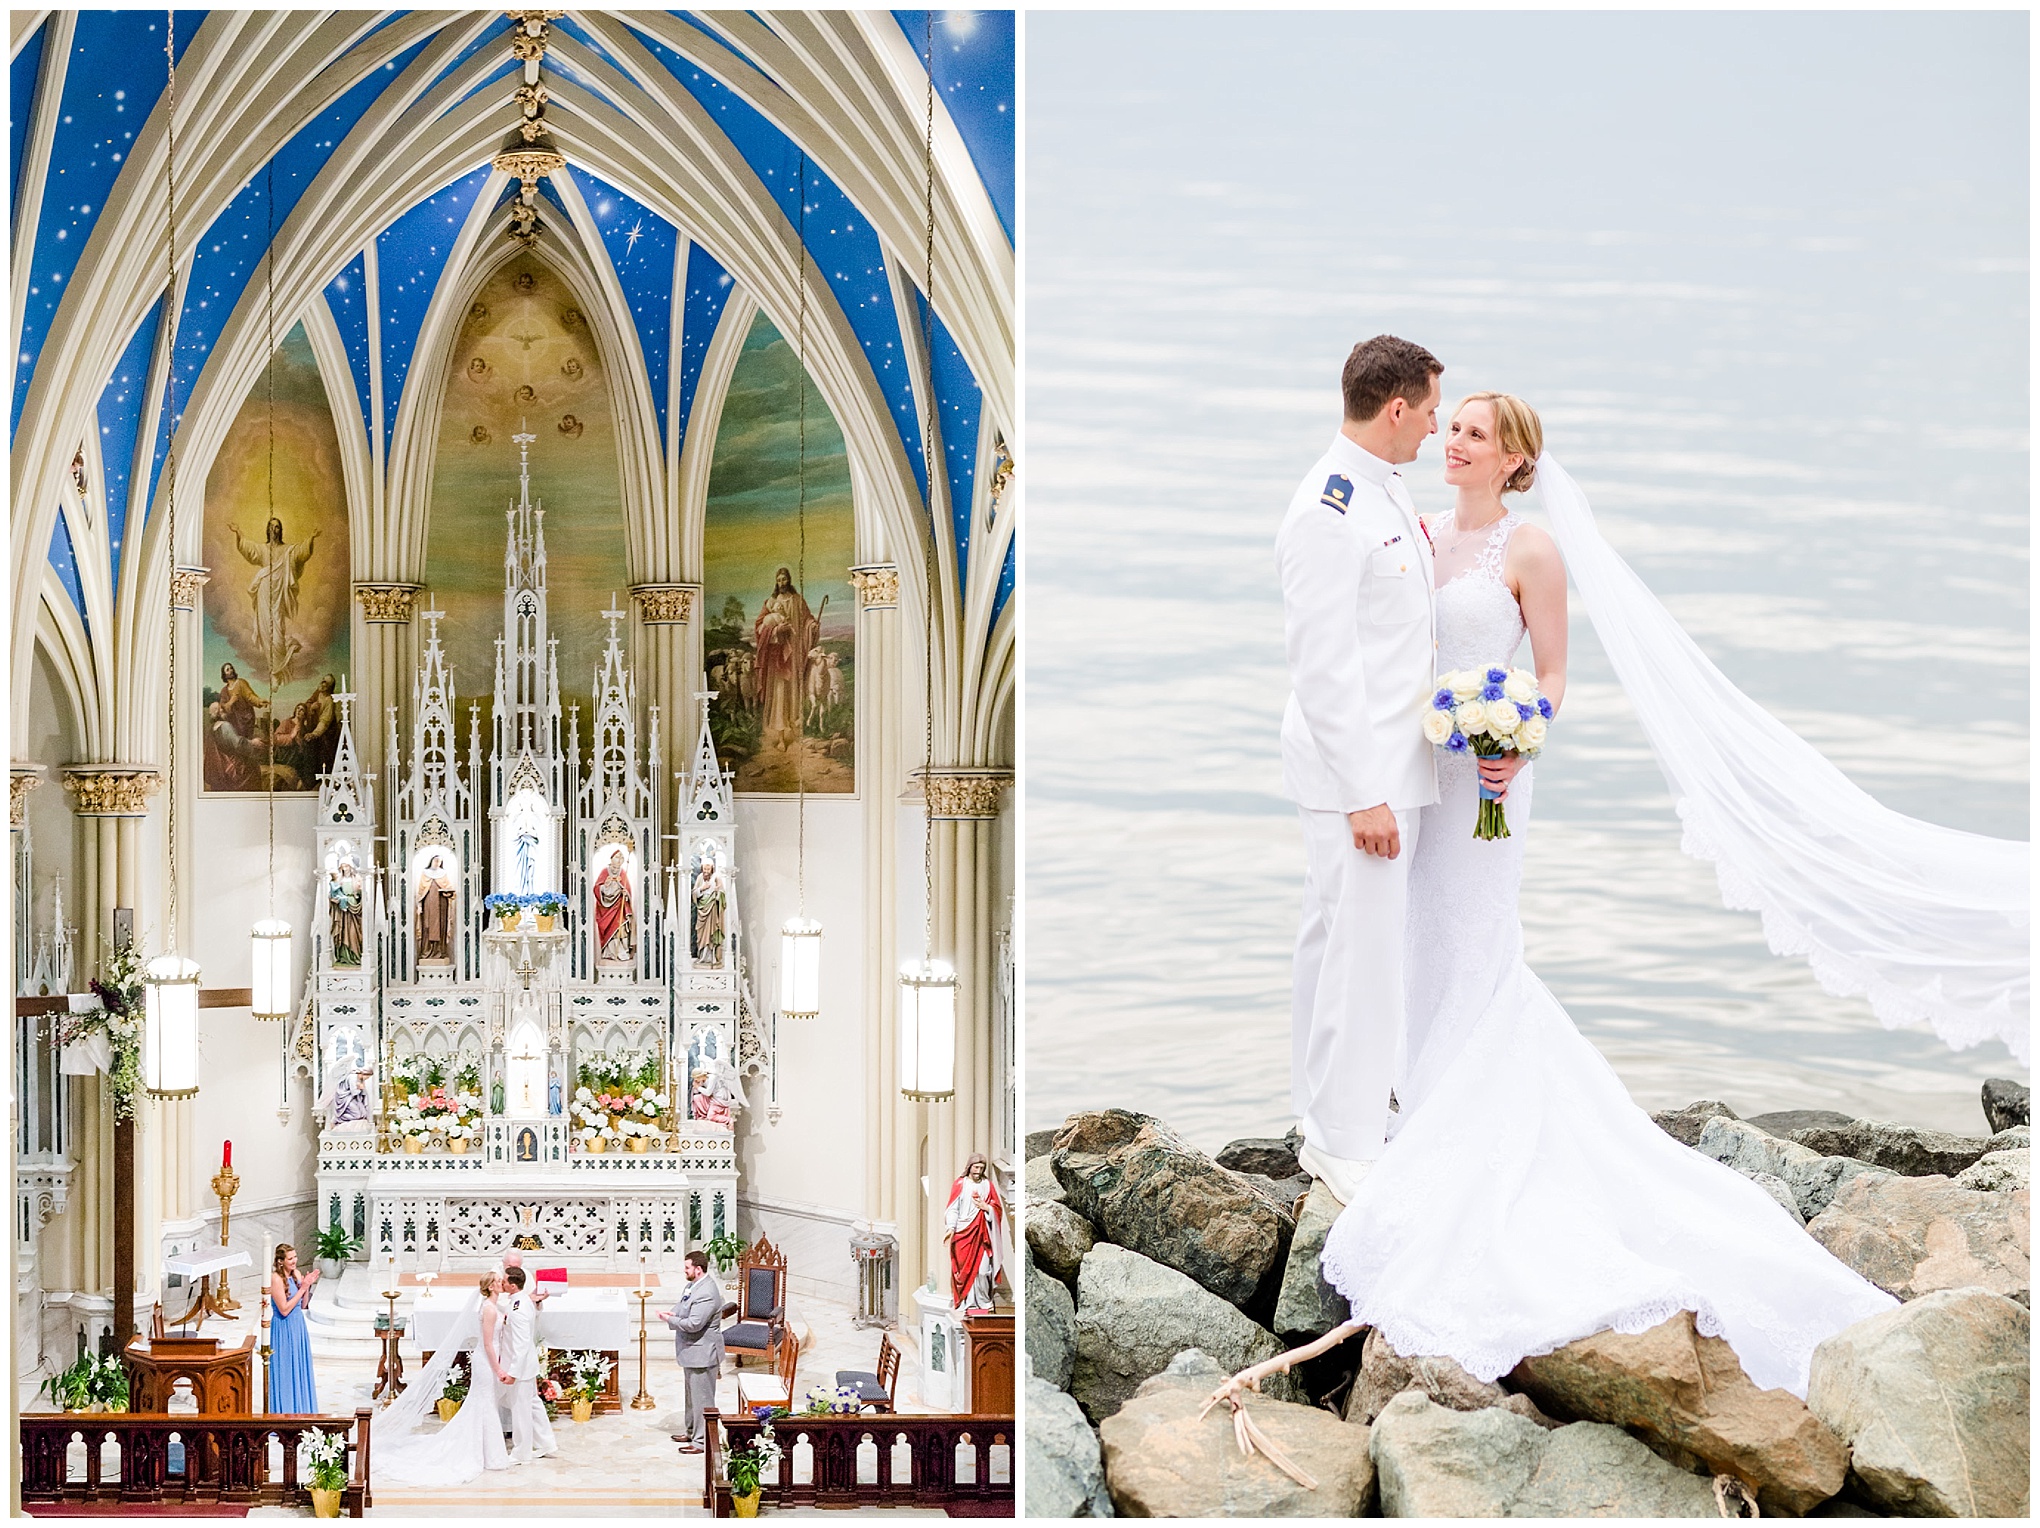 Washington D.C. wedding photography, D.C. wedding photographer, Annapolis wedding, St. Mary's wedding, waterfront wedding portraits